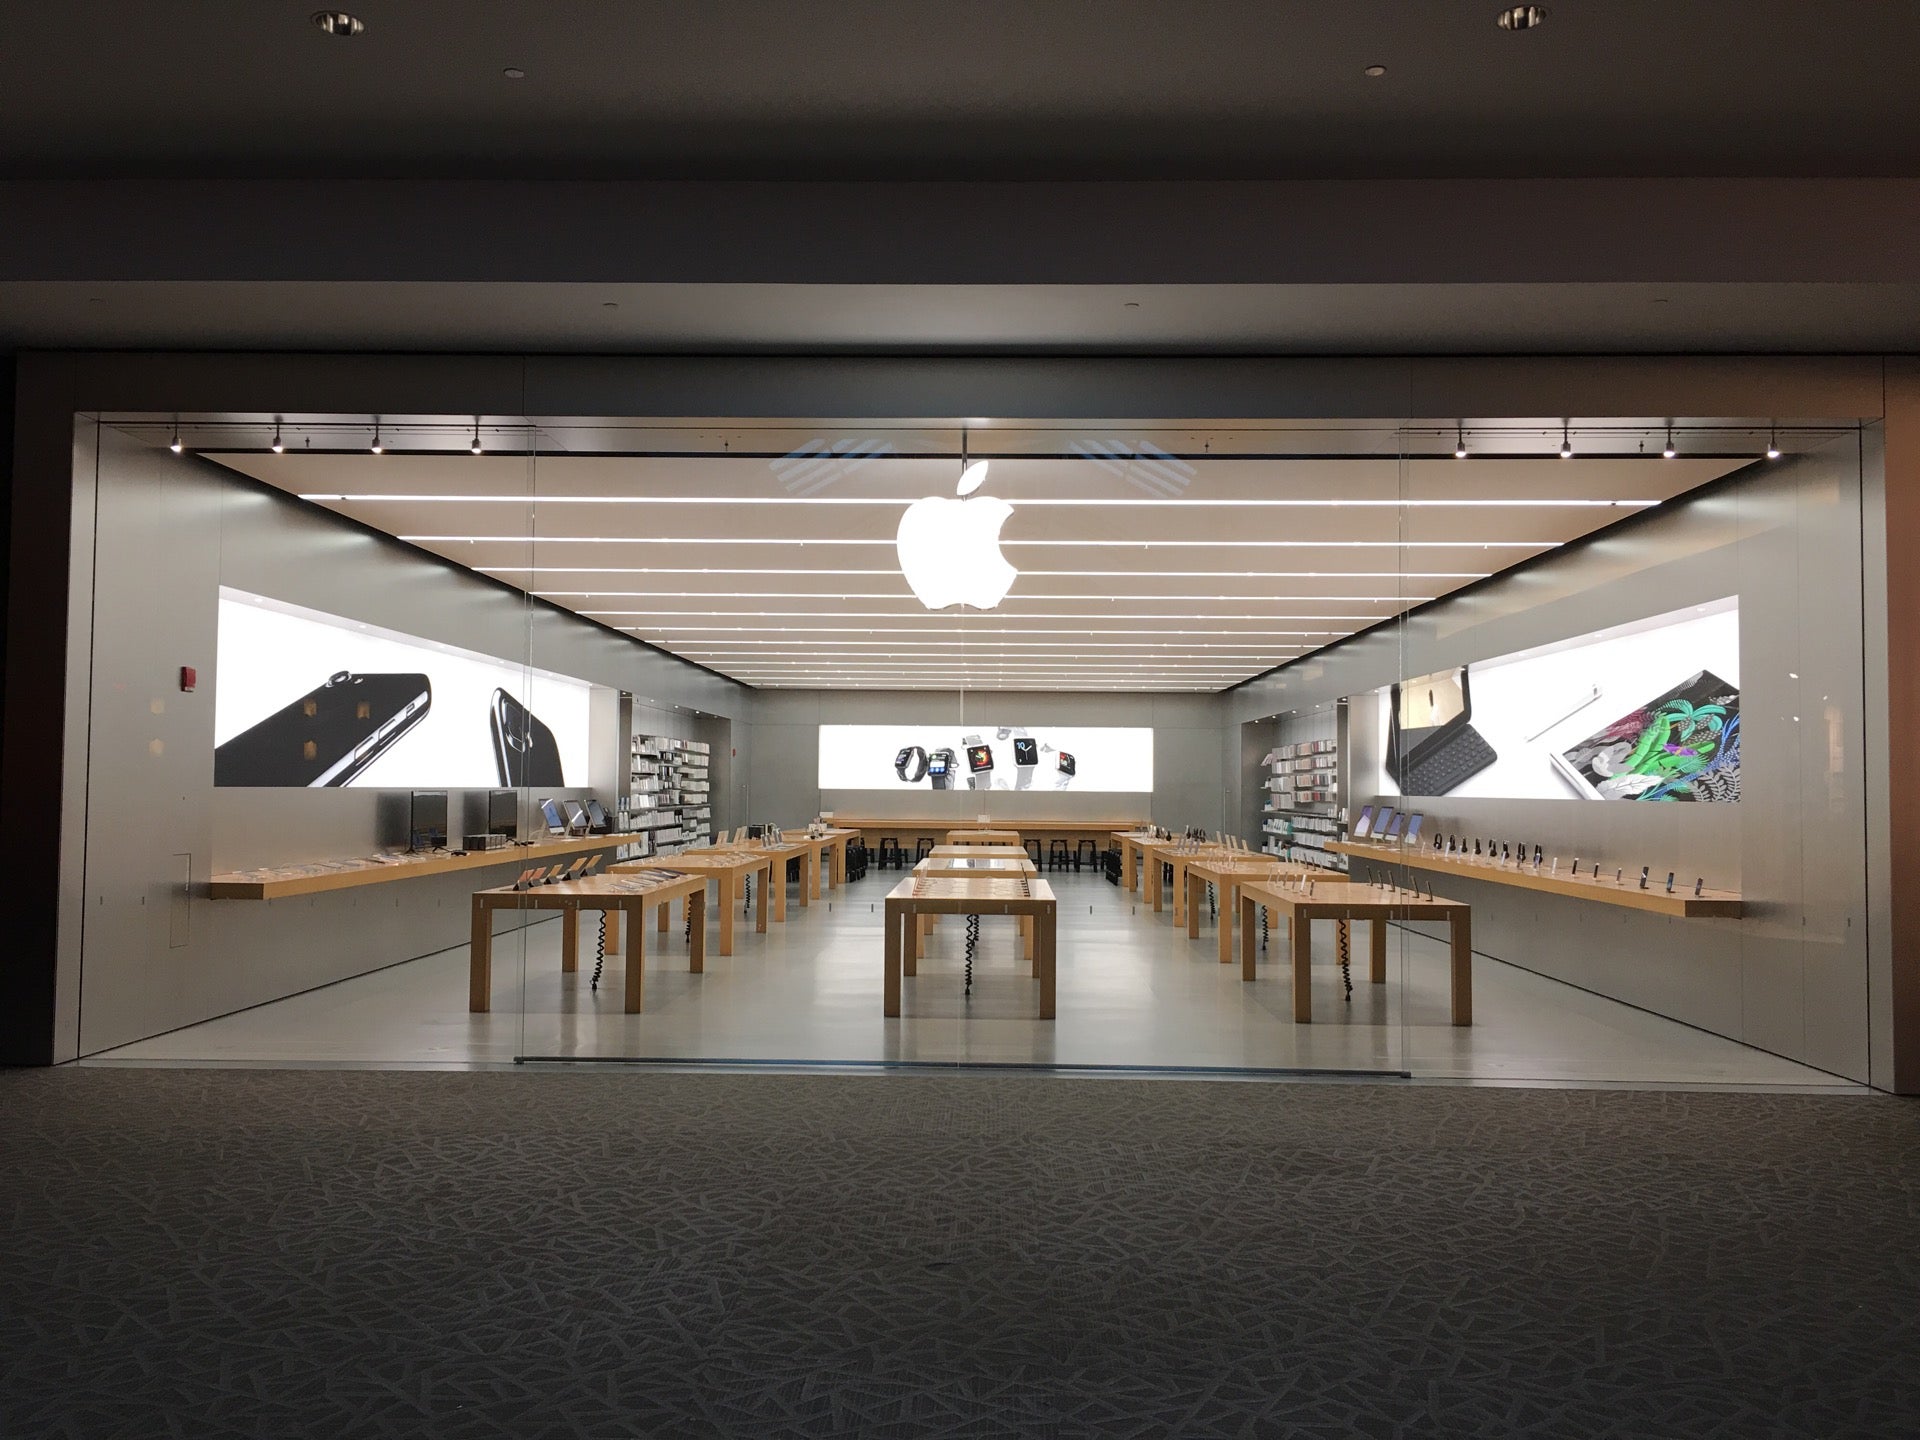 Trumbull - Apple Store - Apple